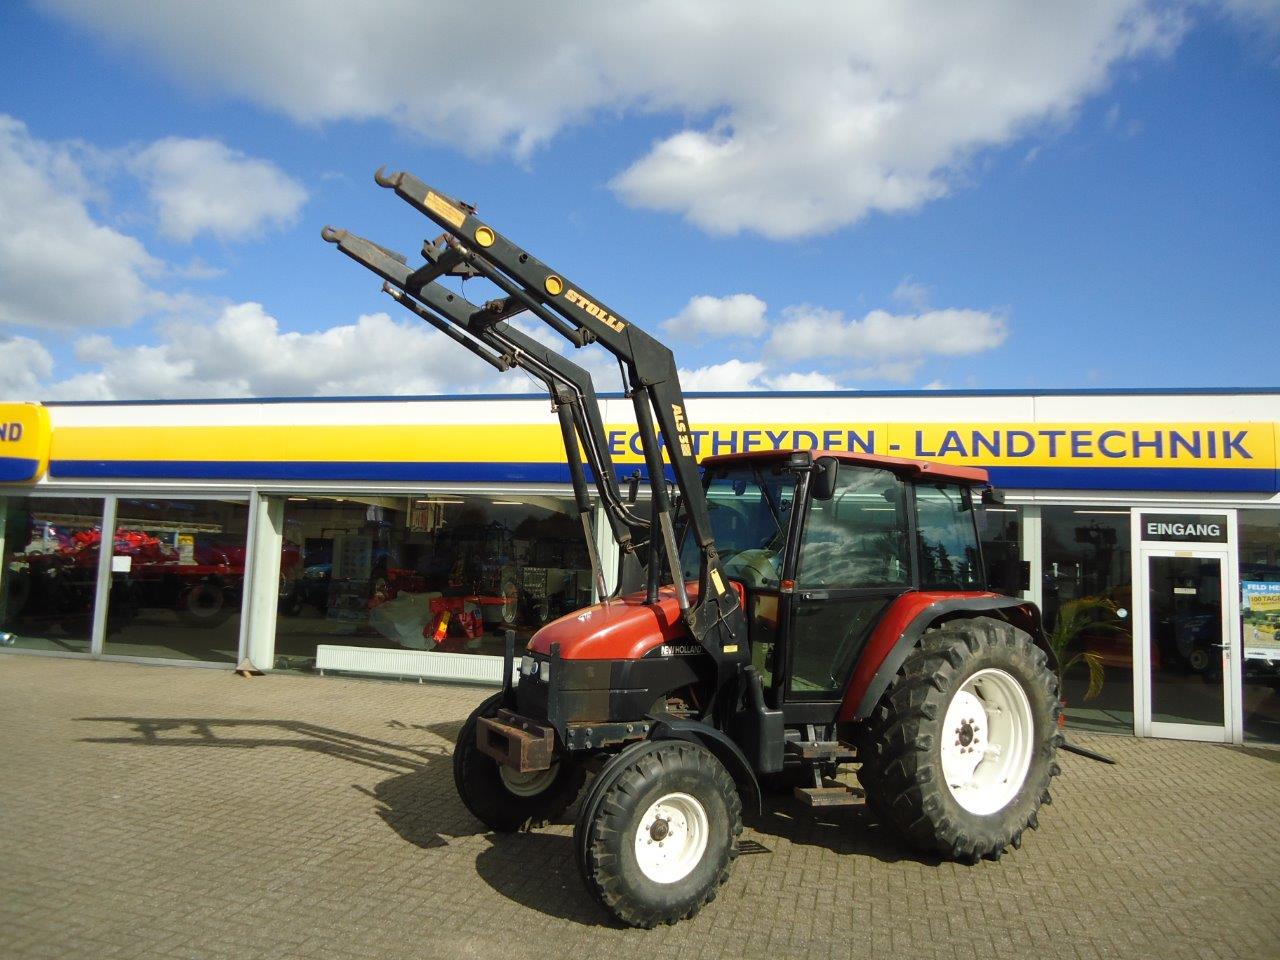 Traktor Fiatagri L75, FL, 4439h, Rees